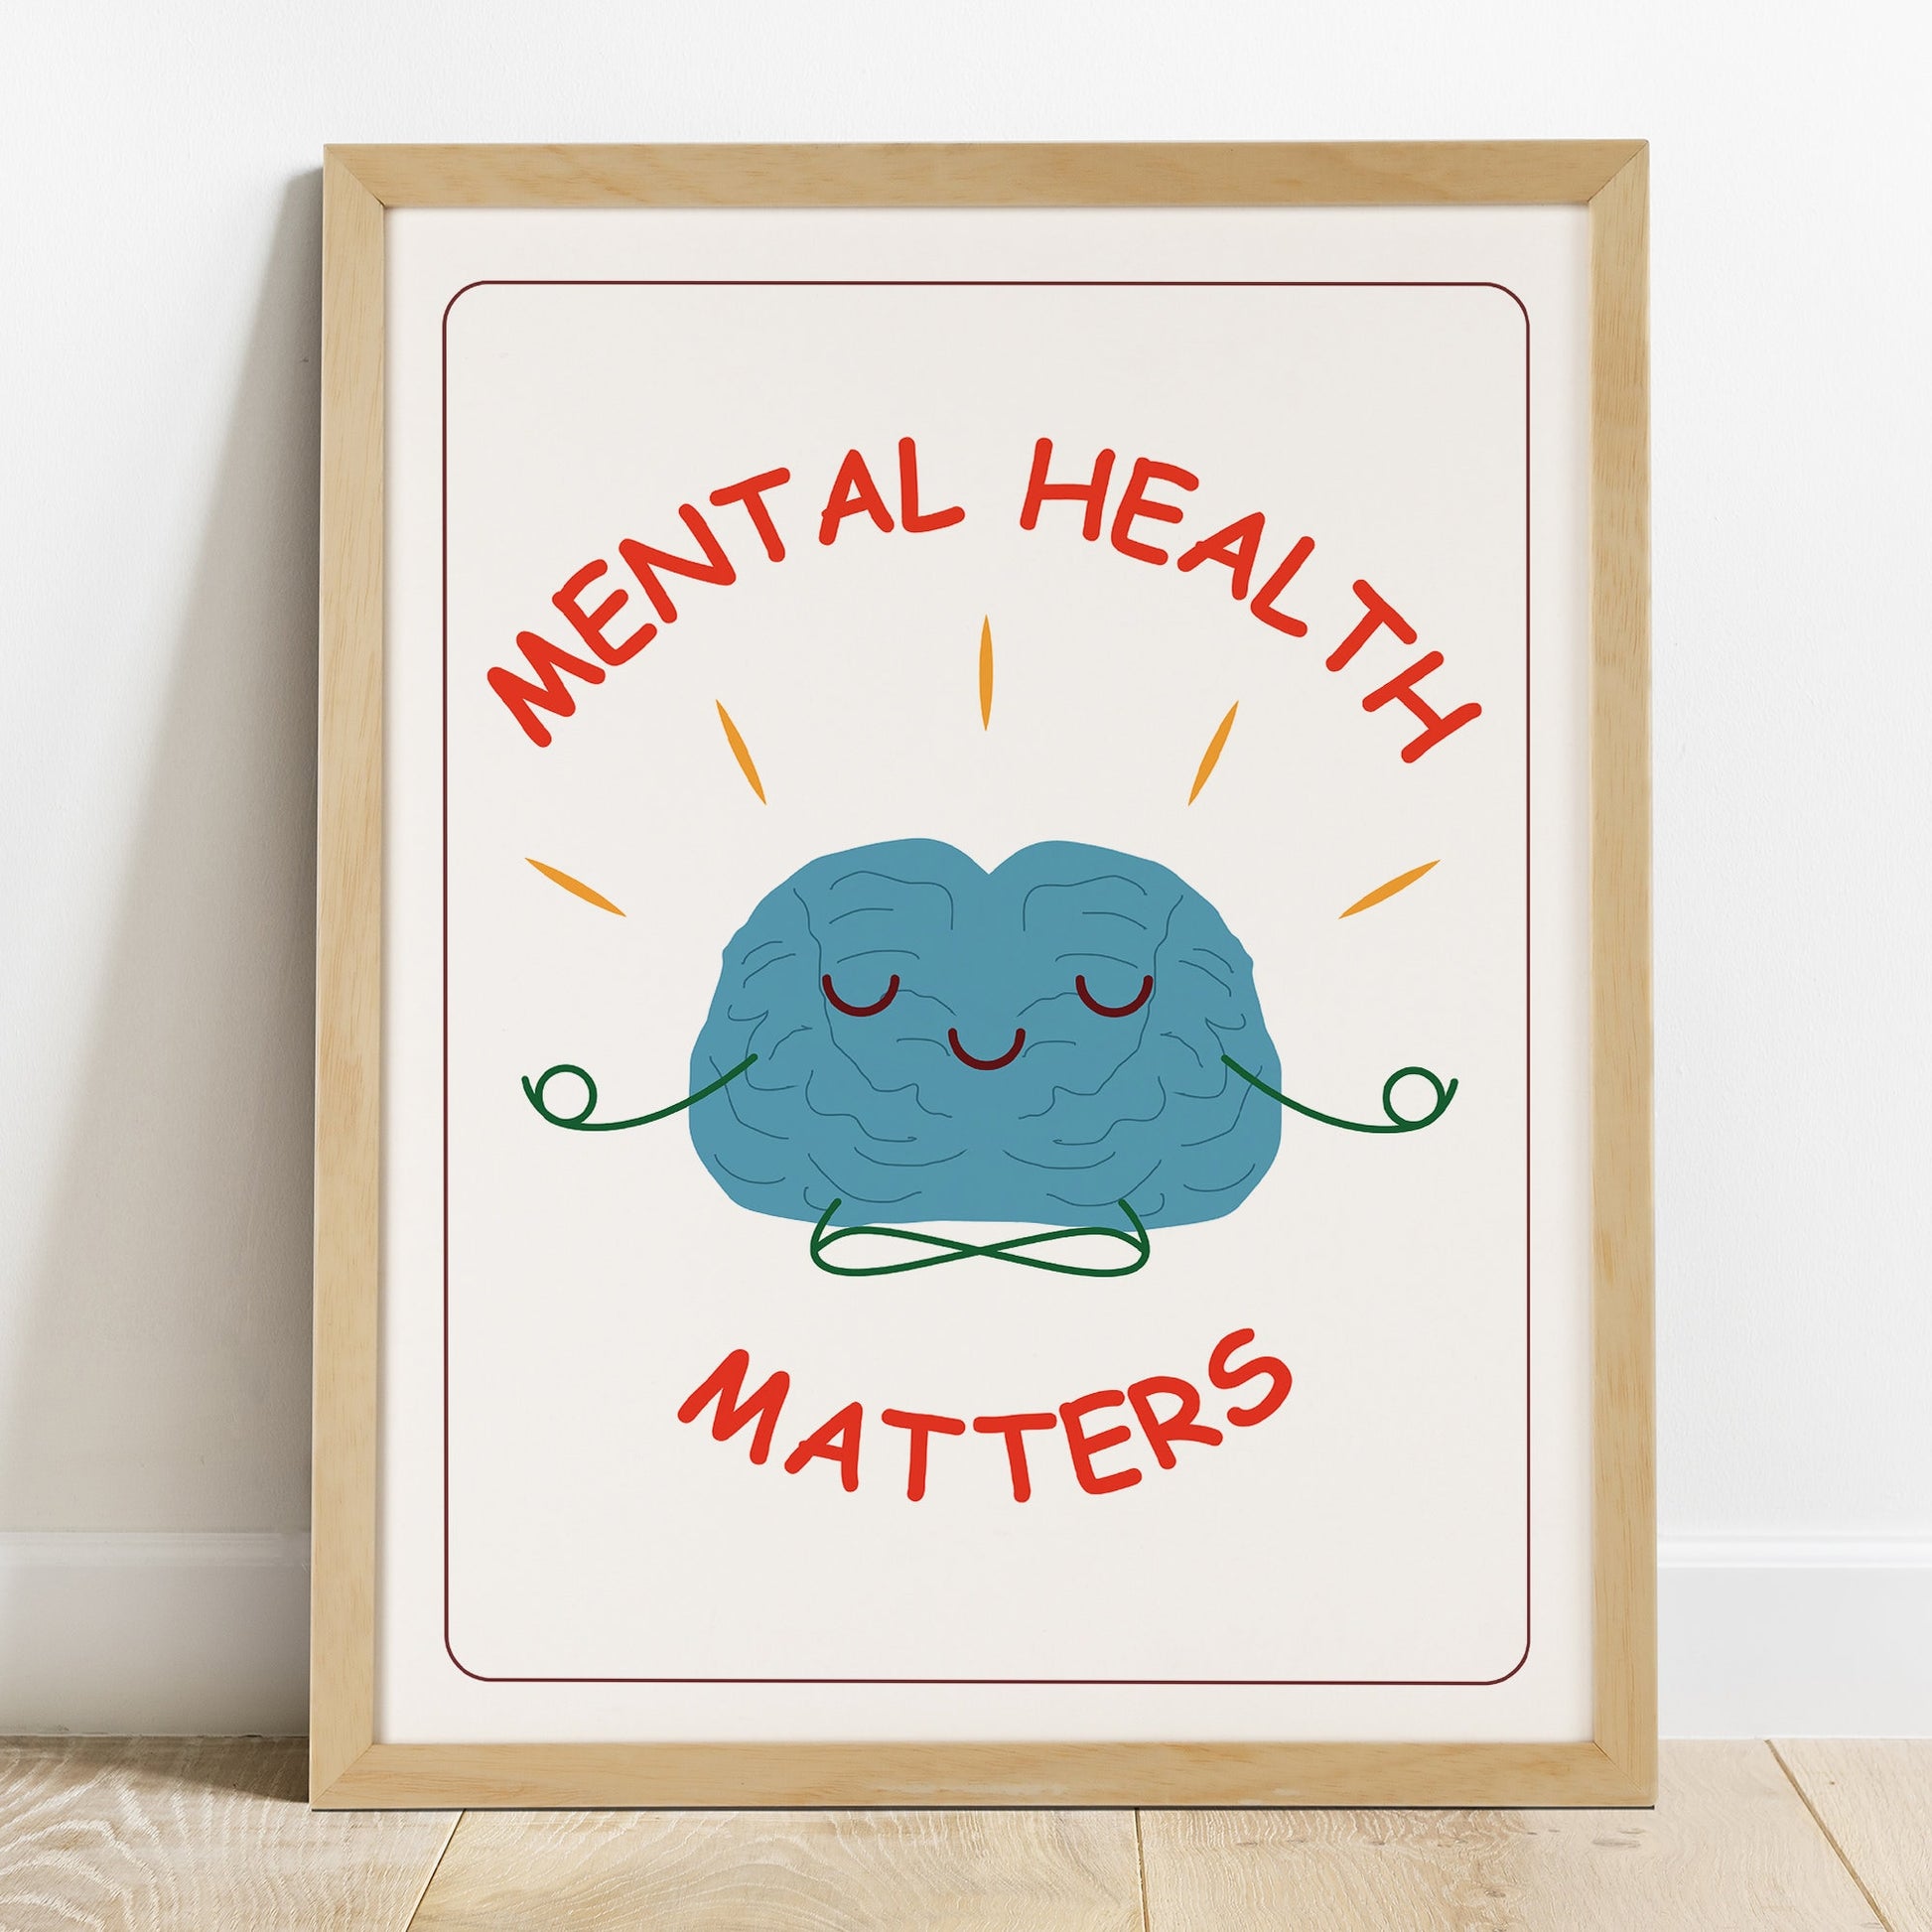 mental health matters images